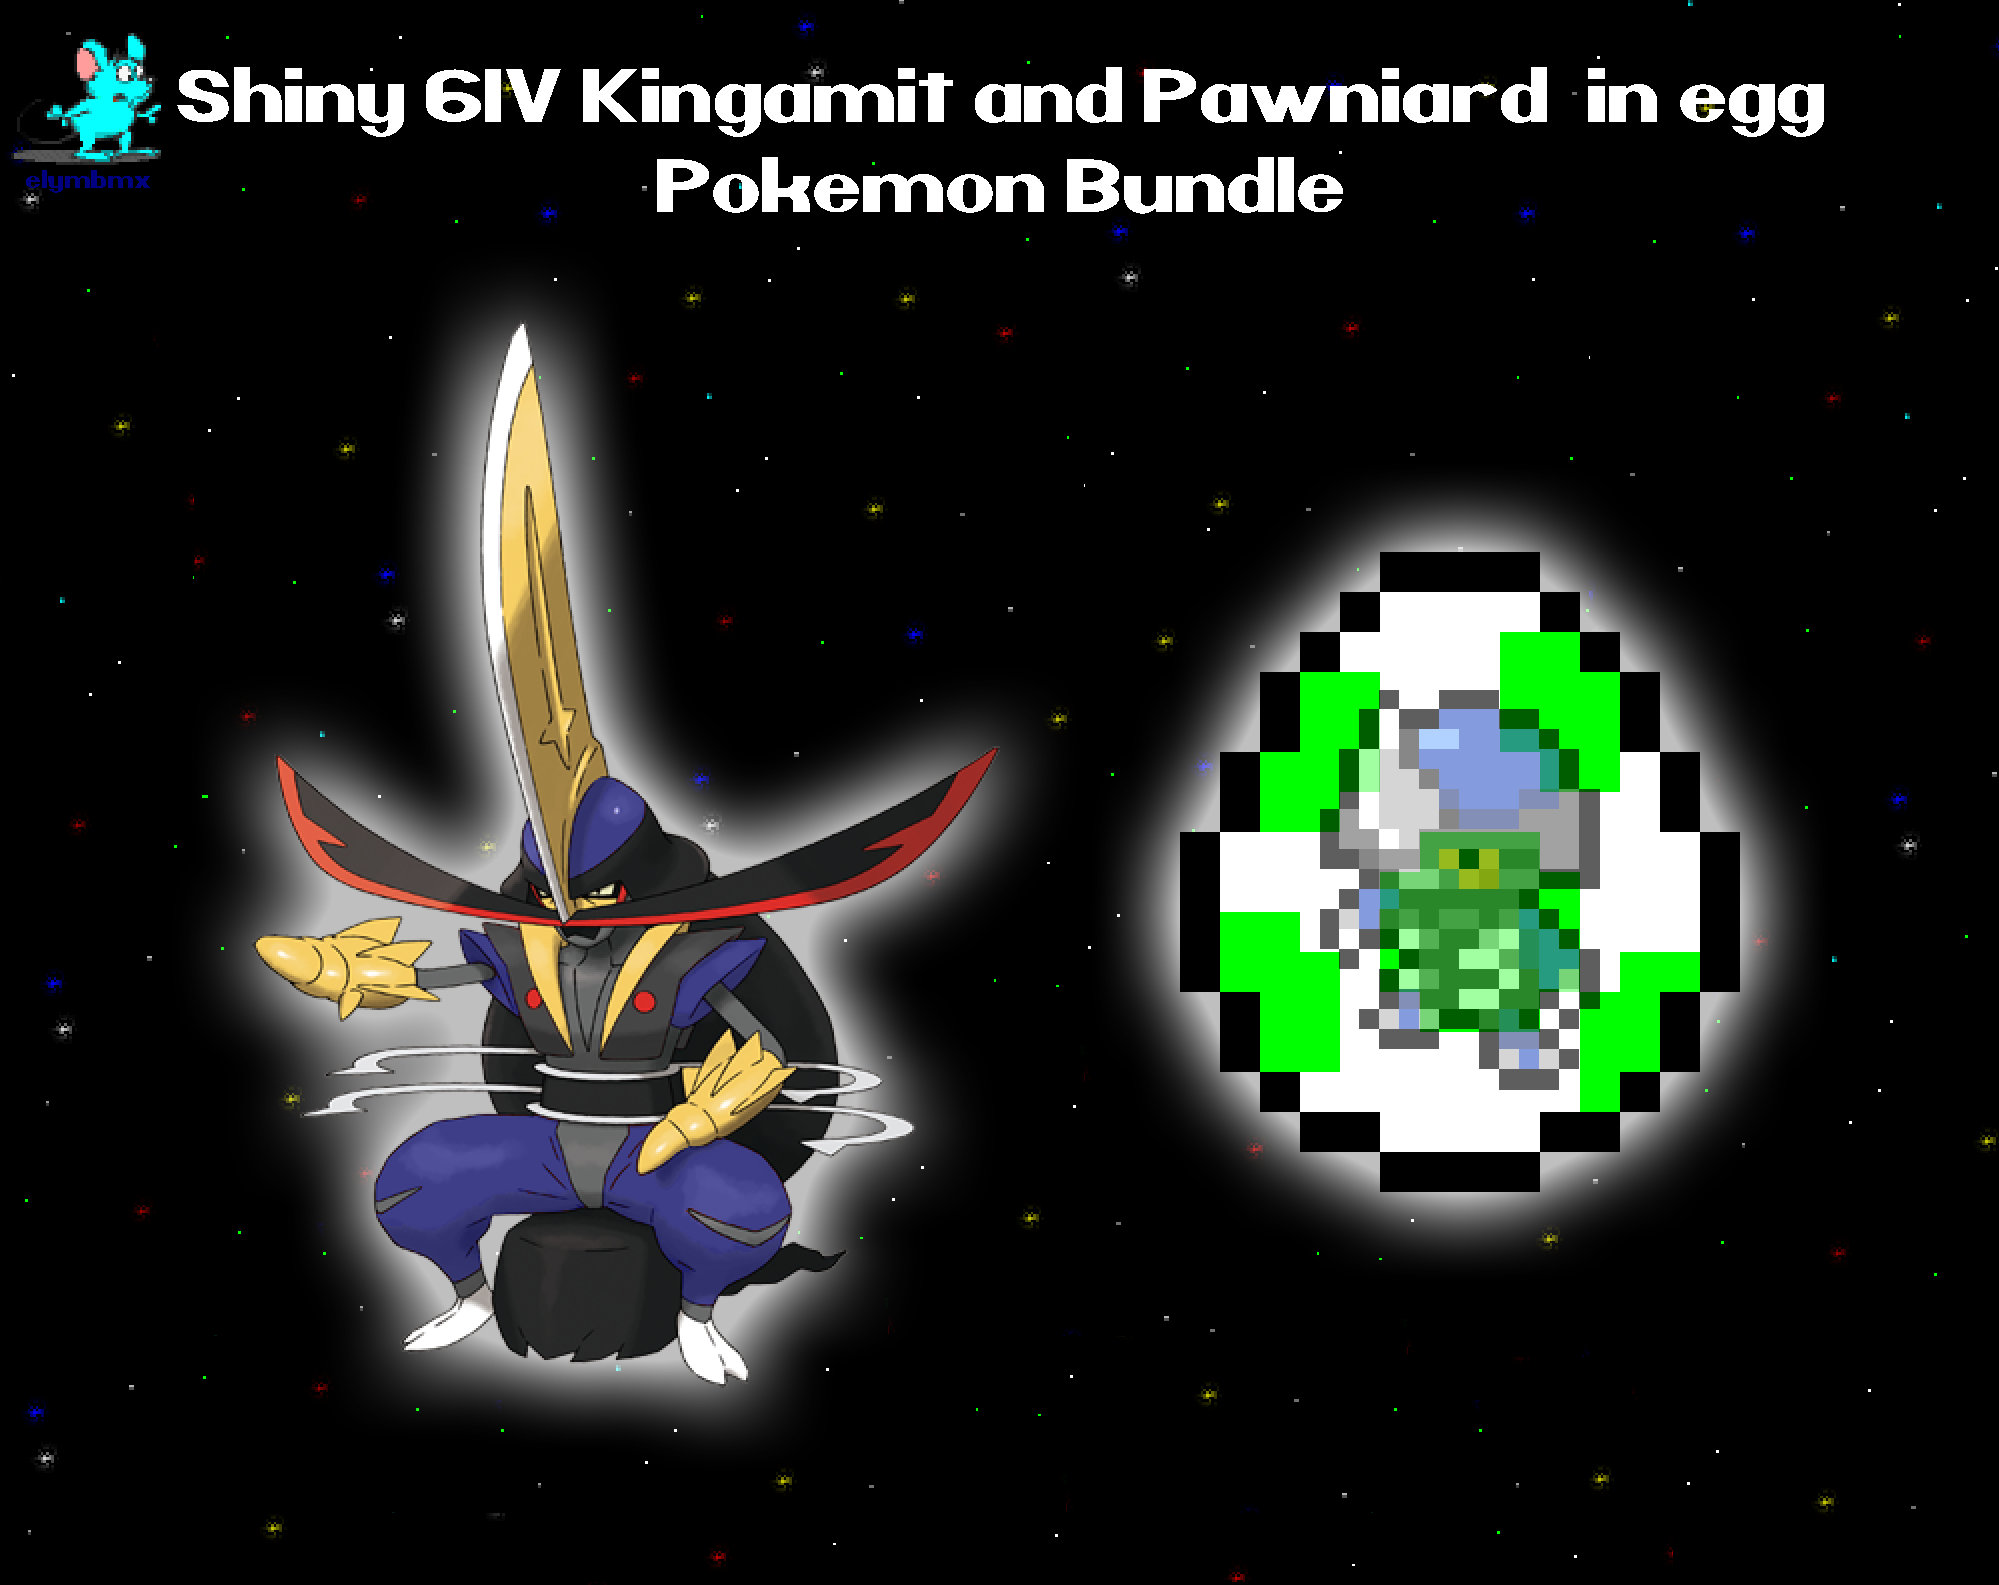 Shiny Galarian Articuno Zapdos Moltres Legendary Bird Event Pokemon SWSH  SCVI